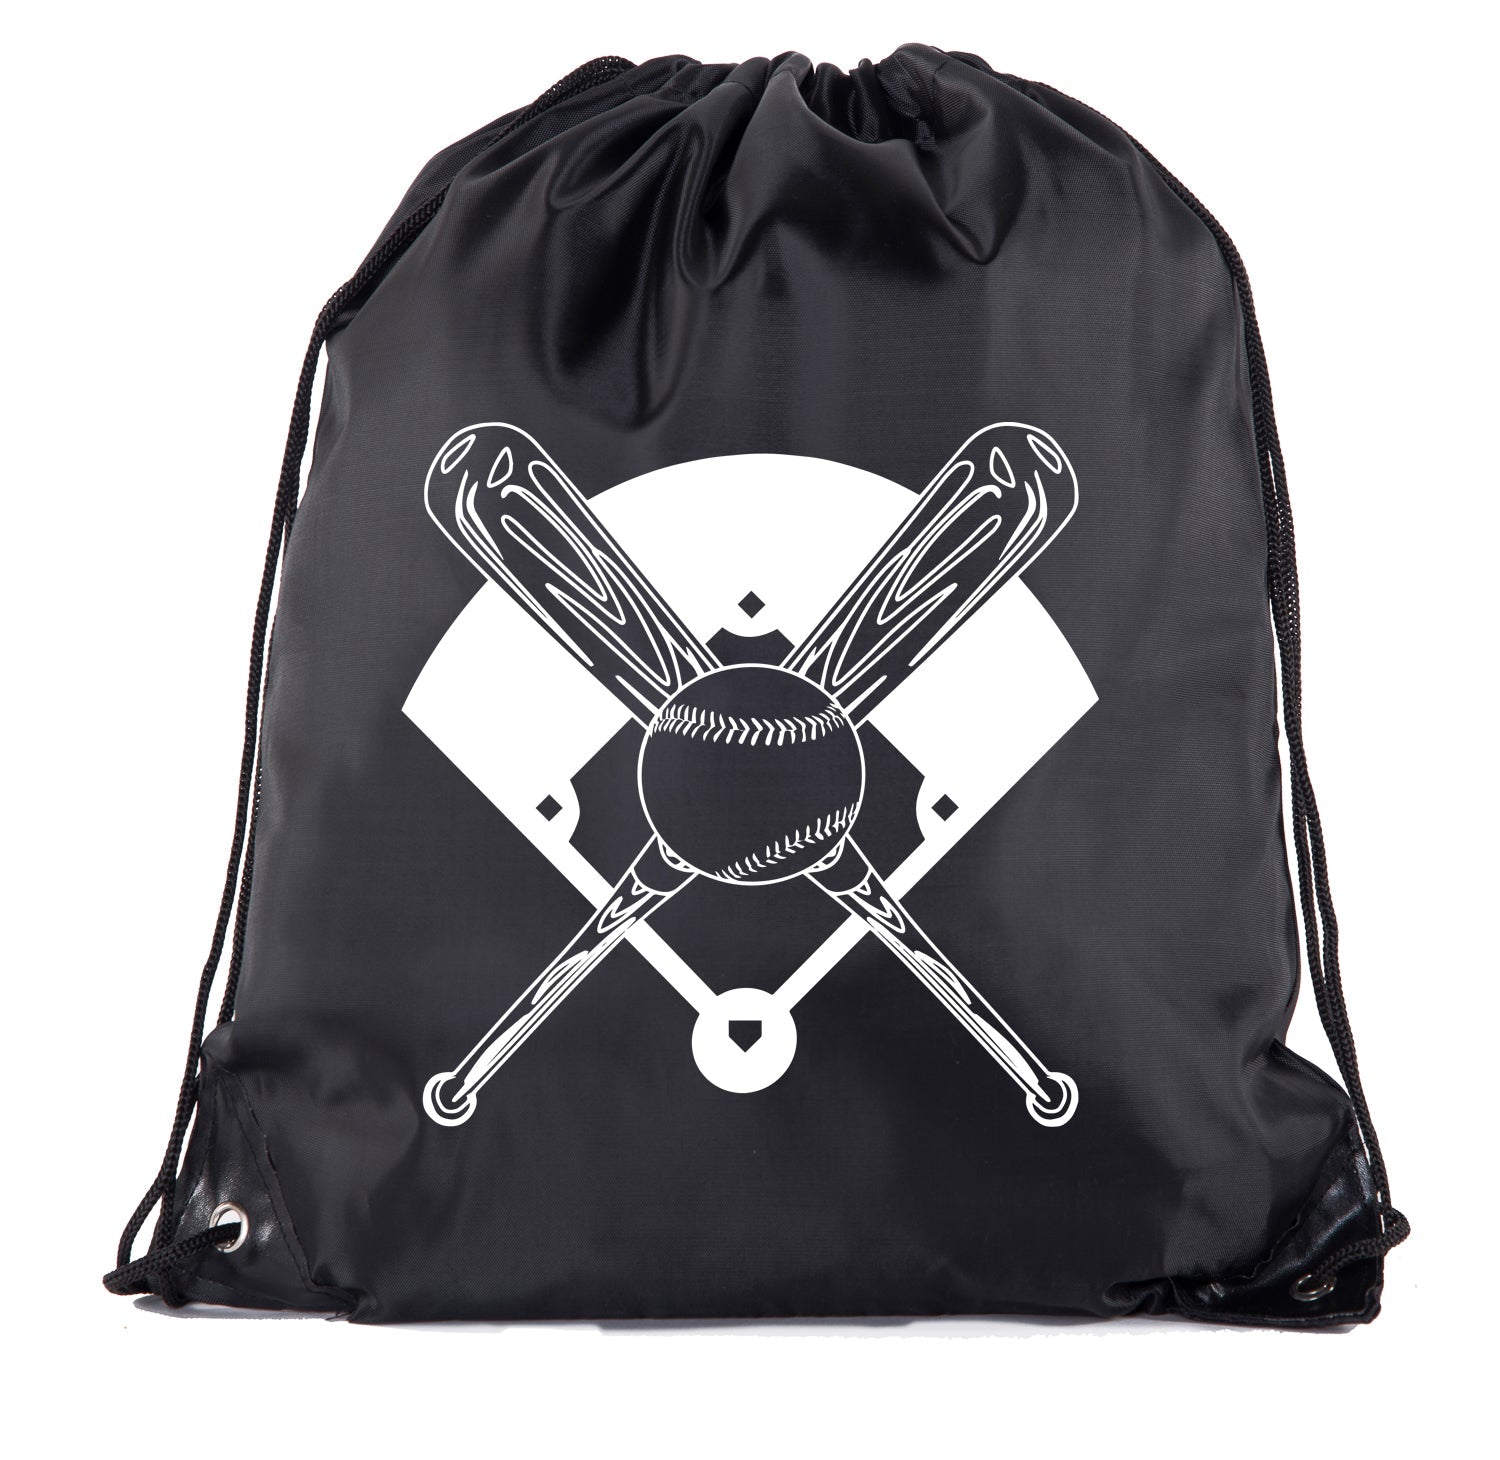 Accessory - Mato & Hash Boys Drawstring Backpack Baseball Bags 1-10 Pack Bulk Options - Bat Cross